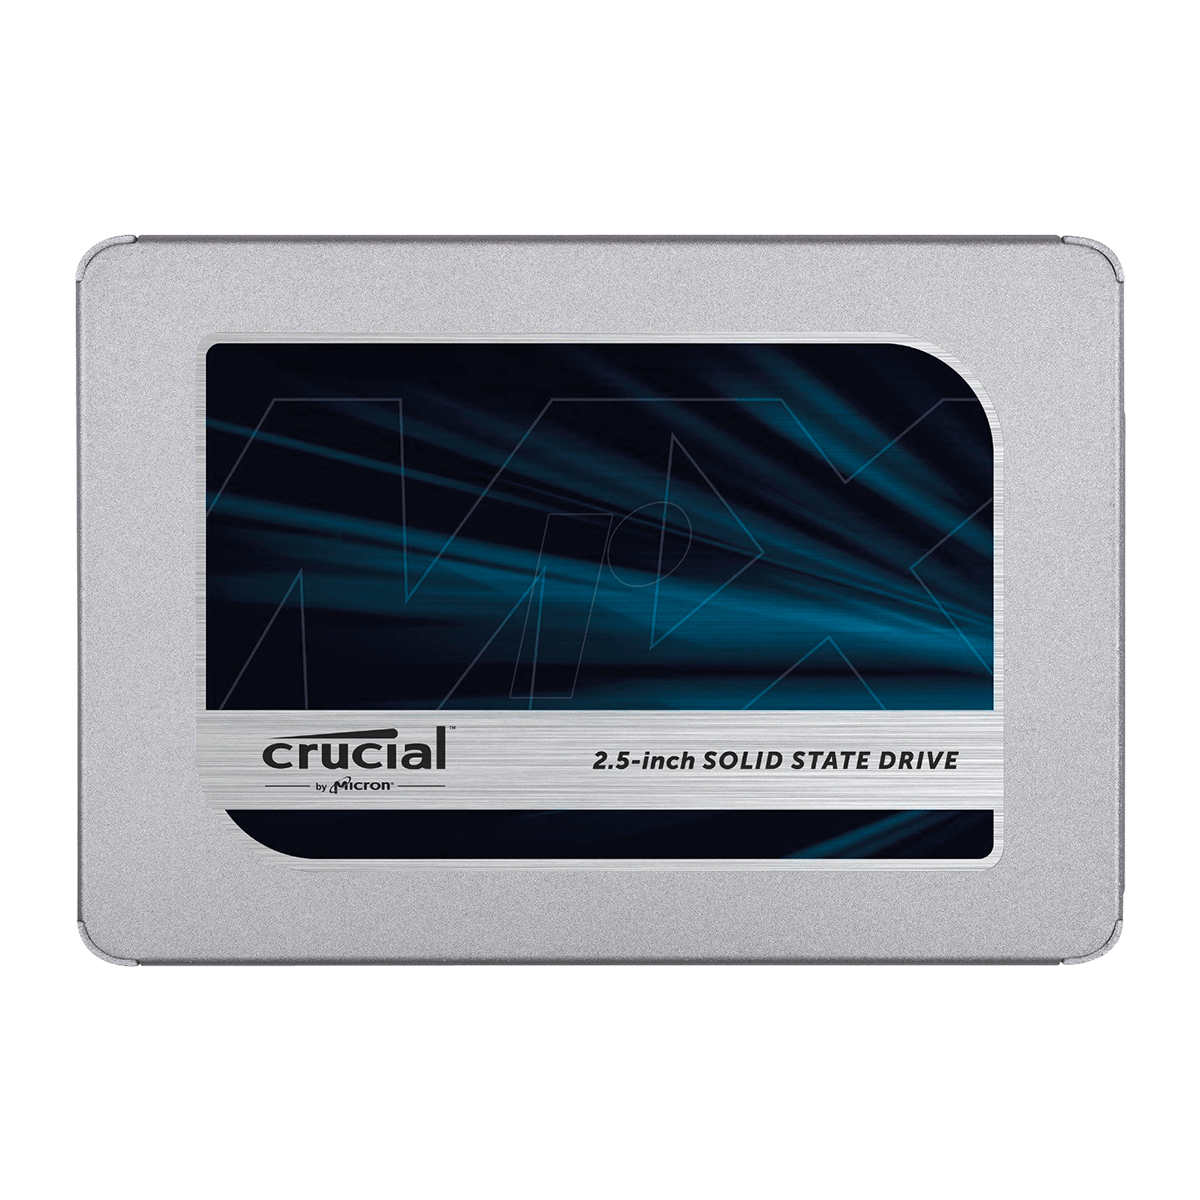 Crucial - Crucial MX500 250GB SATA 2.5-inch, SATA 6.0Gb/s 7mm Solid State Drive